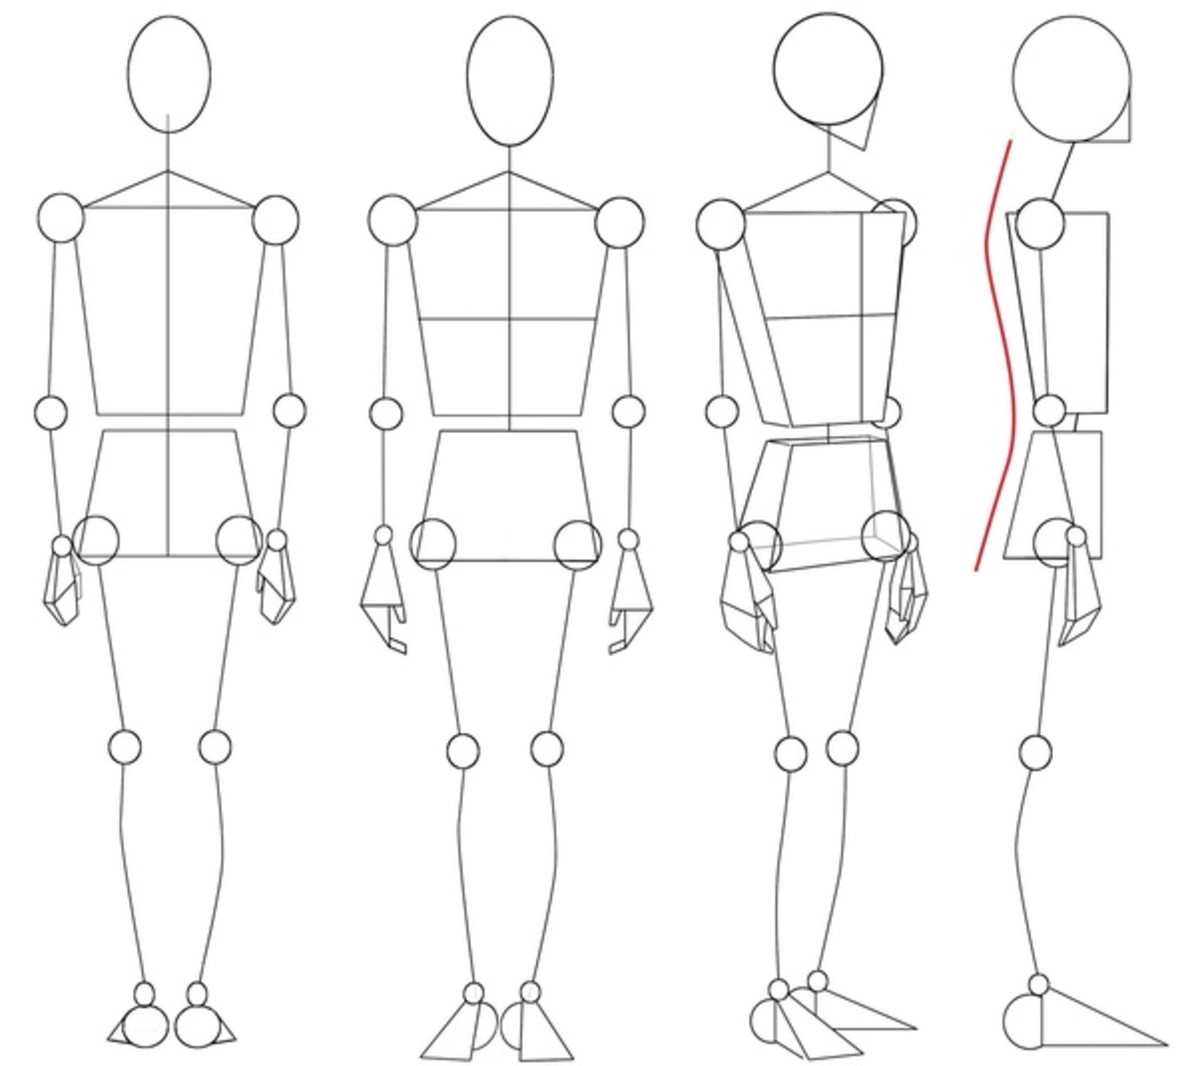 Human anatomy drawn using basic shapes